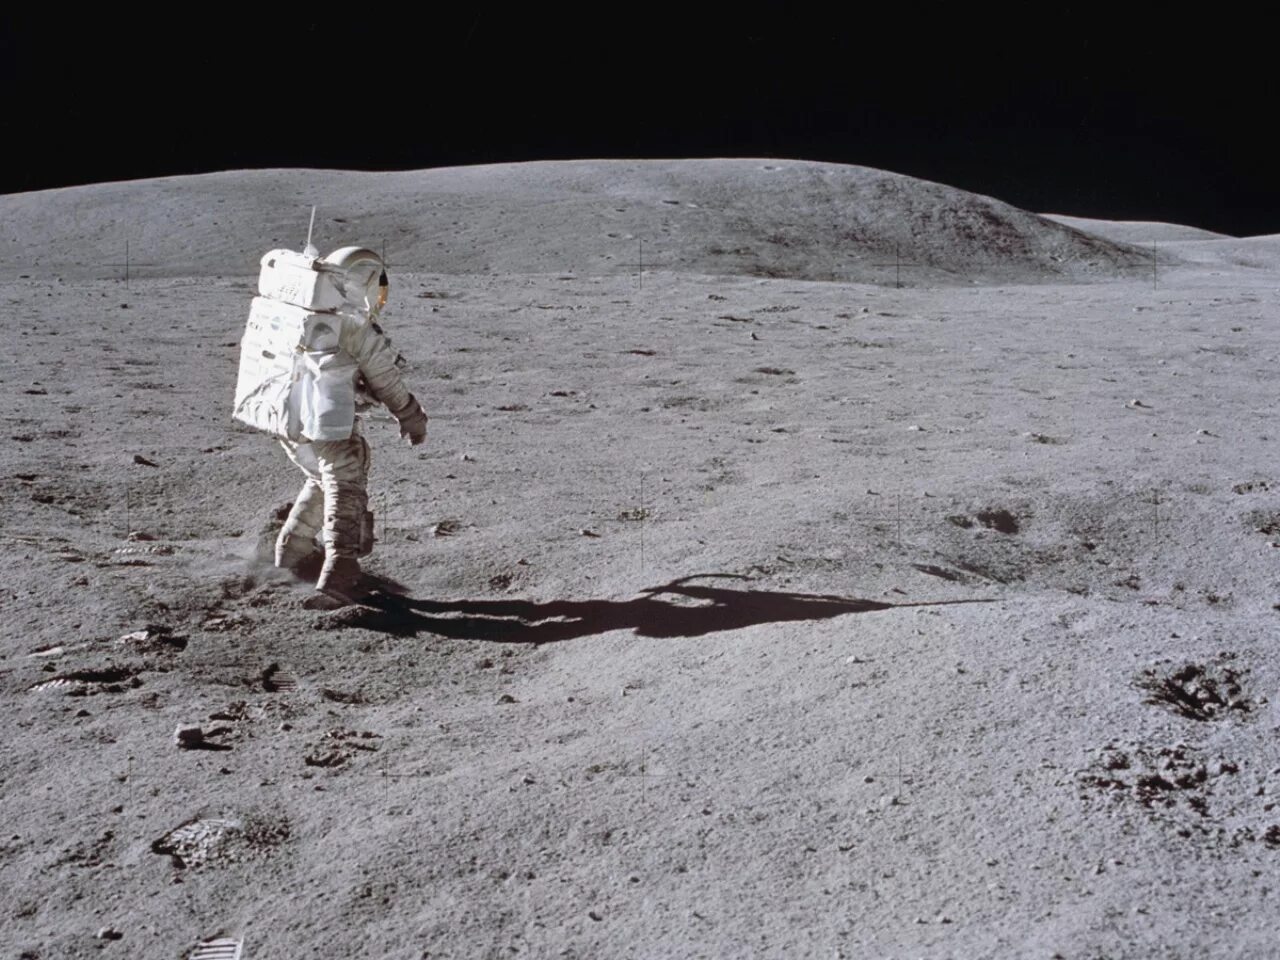 Есть ли на луне. Аполлон 16 фото на Луне. Чарльз Дьюк на Луне. Человек на Луне 1969. Снимки с поверхности Луны Аполлон.